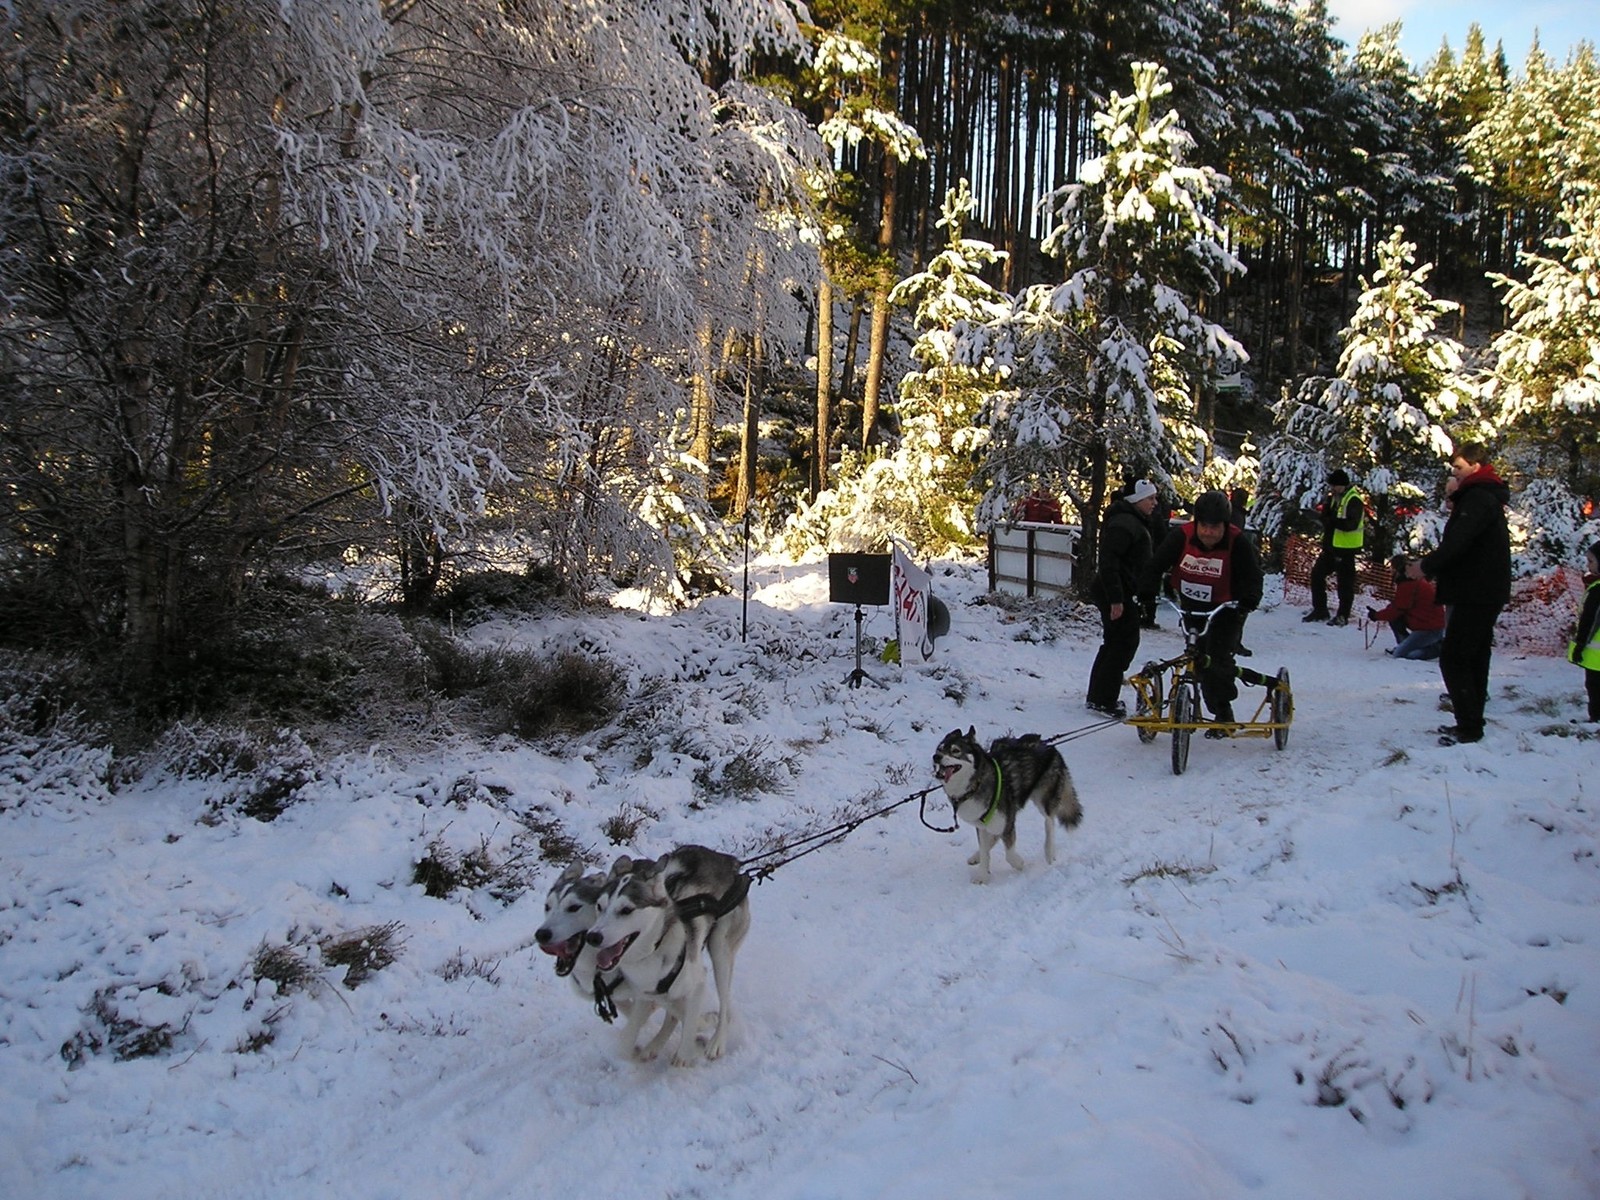 Annual Sled Dog Rally held at Loch Morlich, near Aviemore (29/01/17)